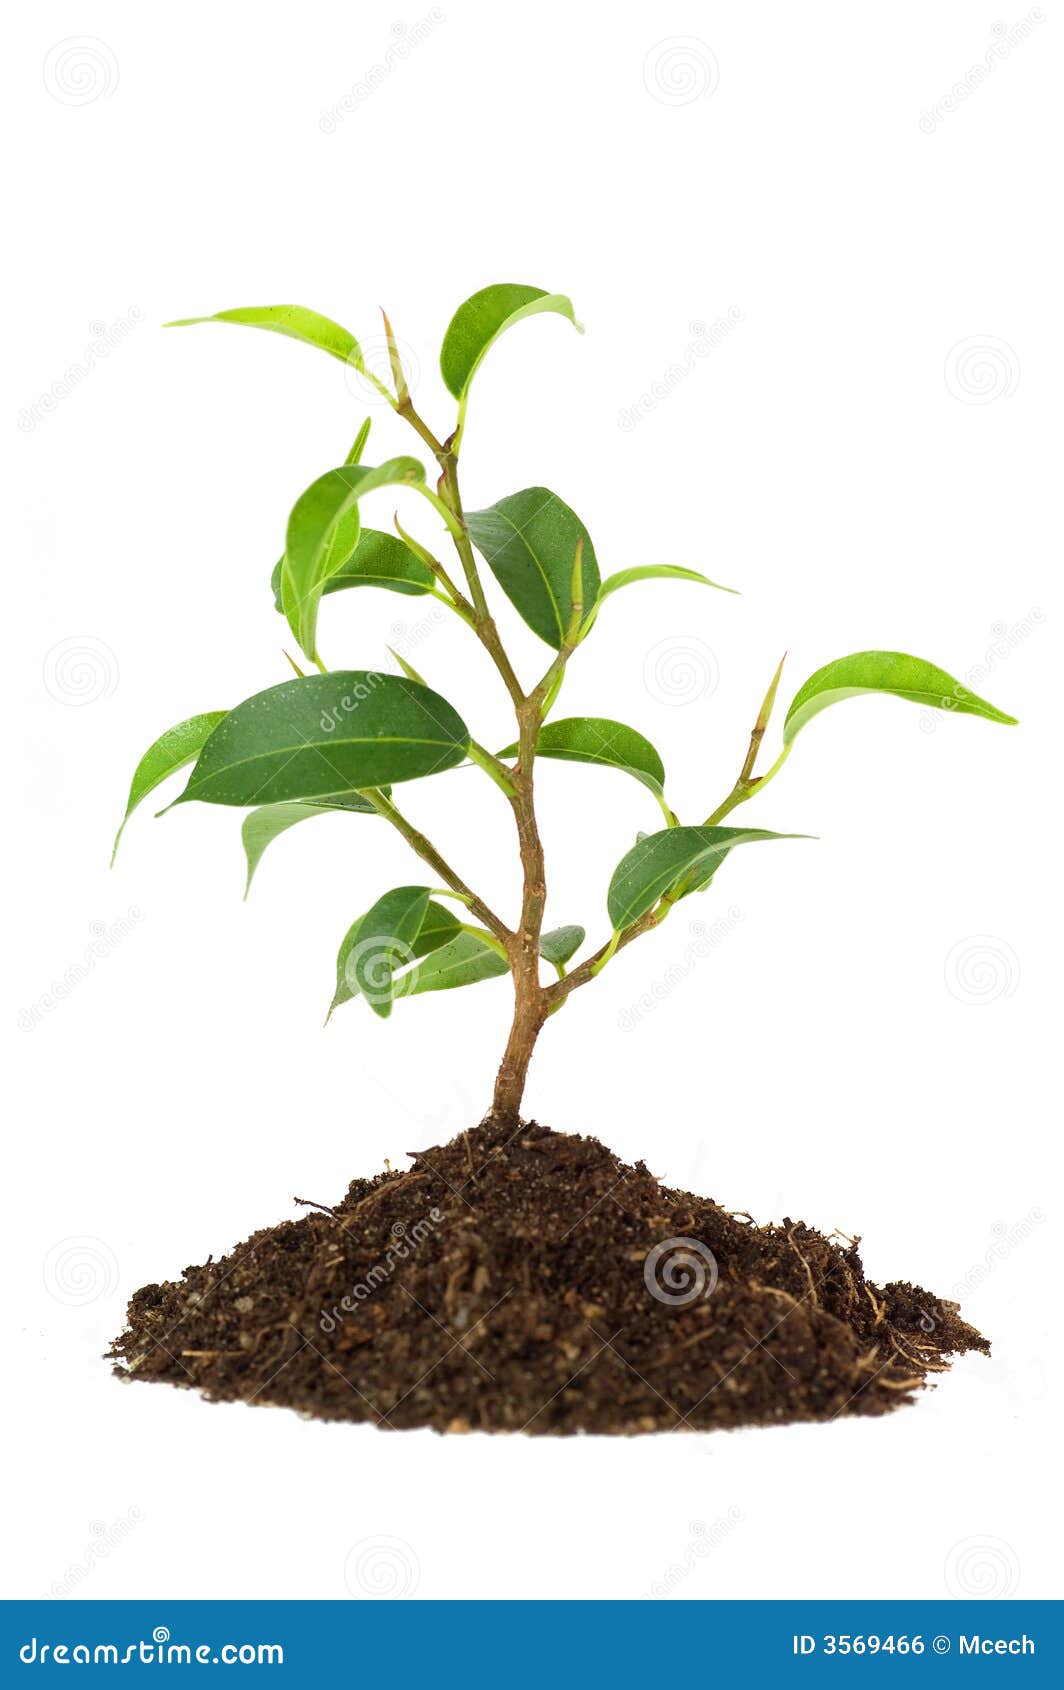 New Plant Life Royalty Free Stock Image - Image: 3569466